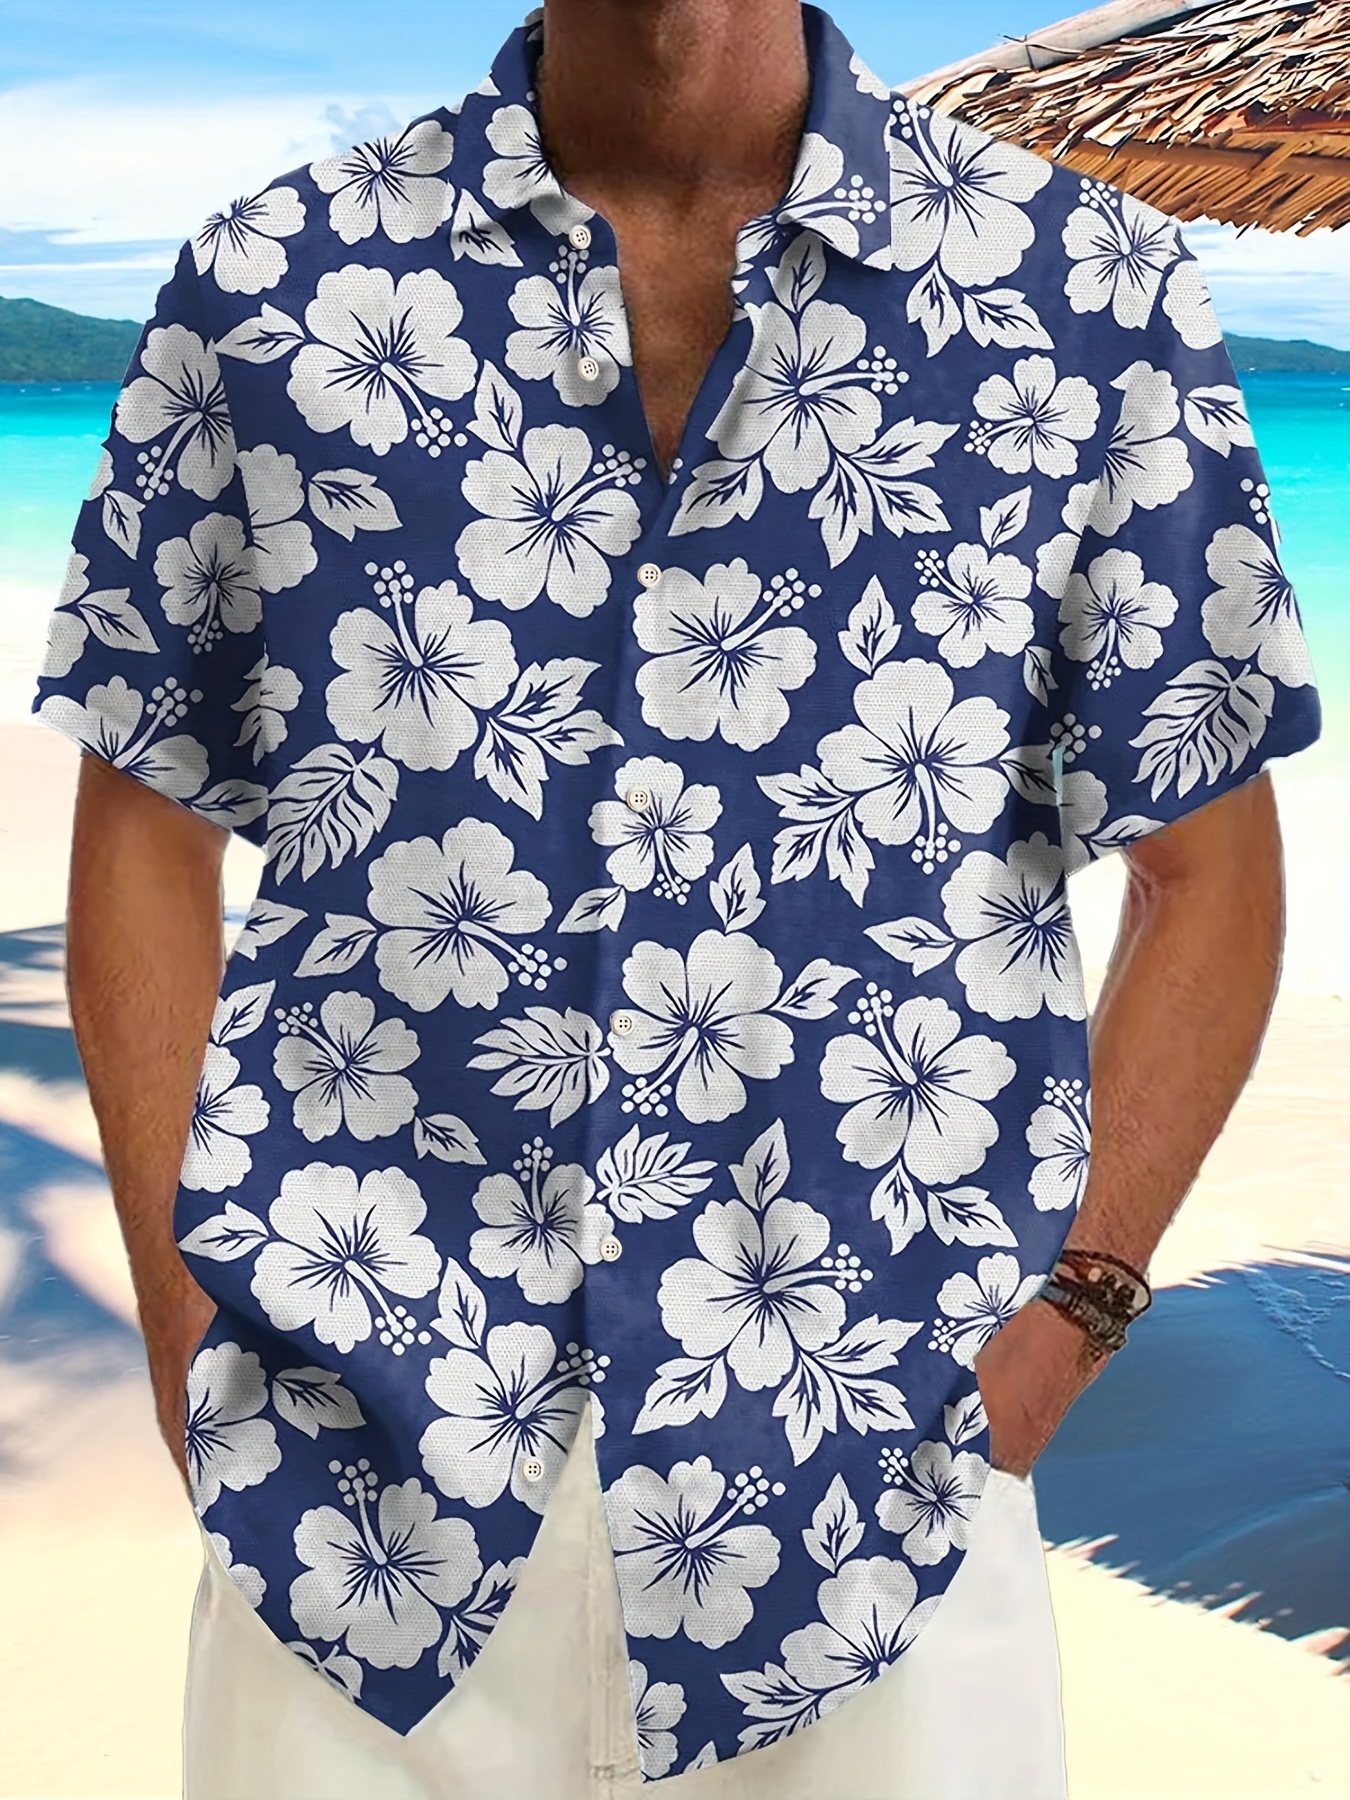 Hawaiian Shirts for Men,Men's Hawaiian Shirts Short Sleeve Aloha